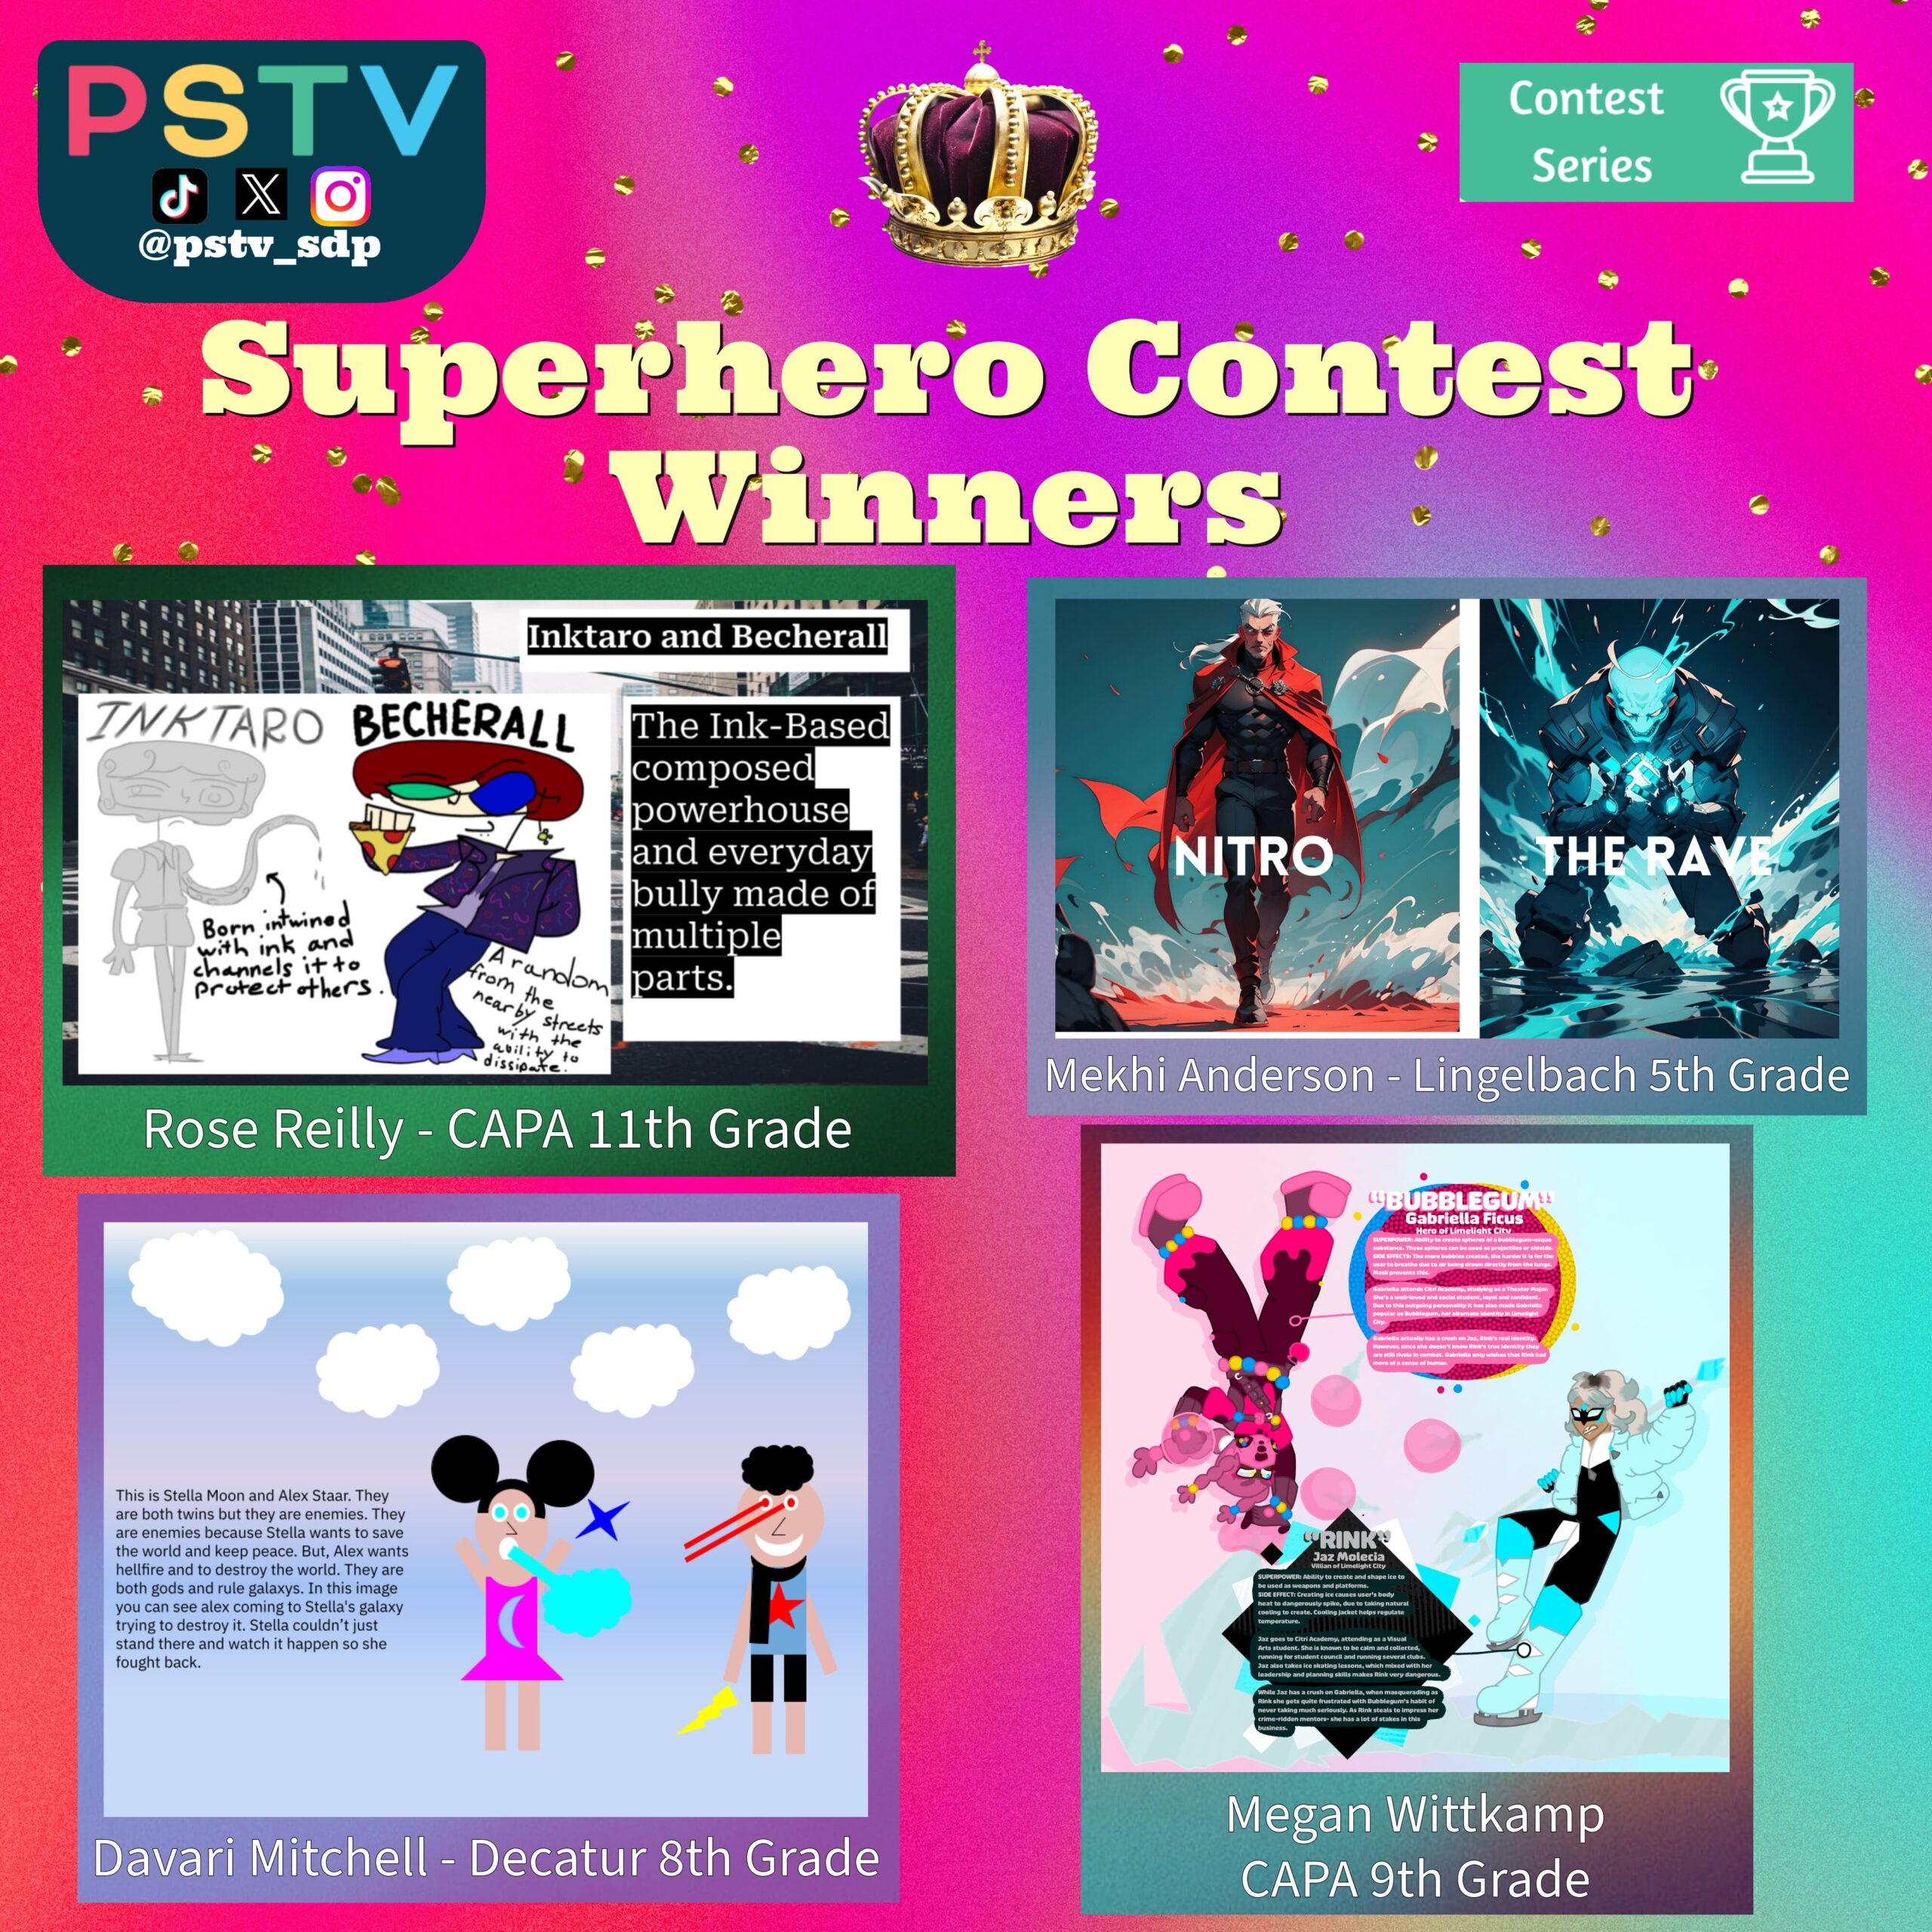 Winners of the Super Hero Contest